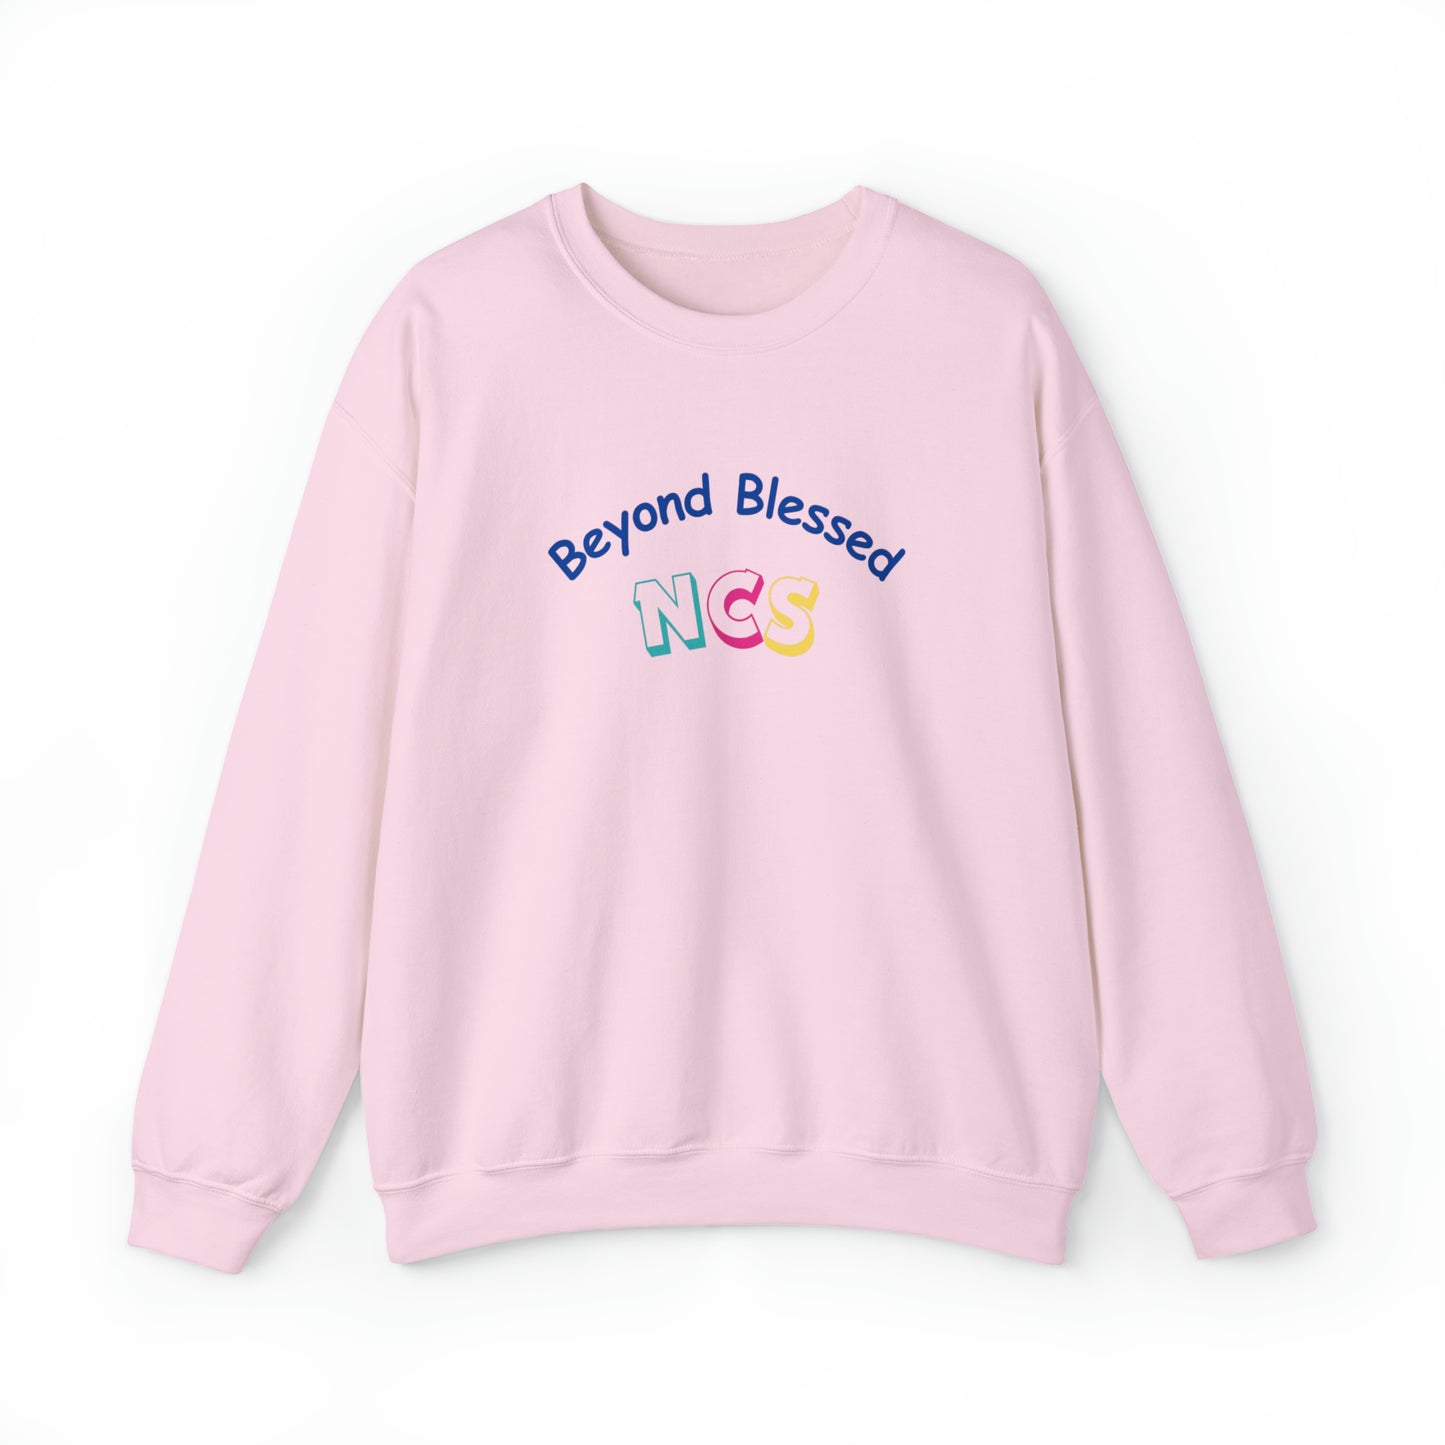 Beyond Blessed NCS - Crewneck Sweatshirt